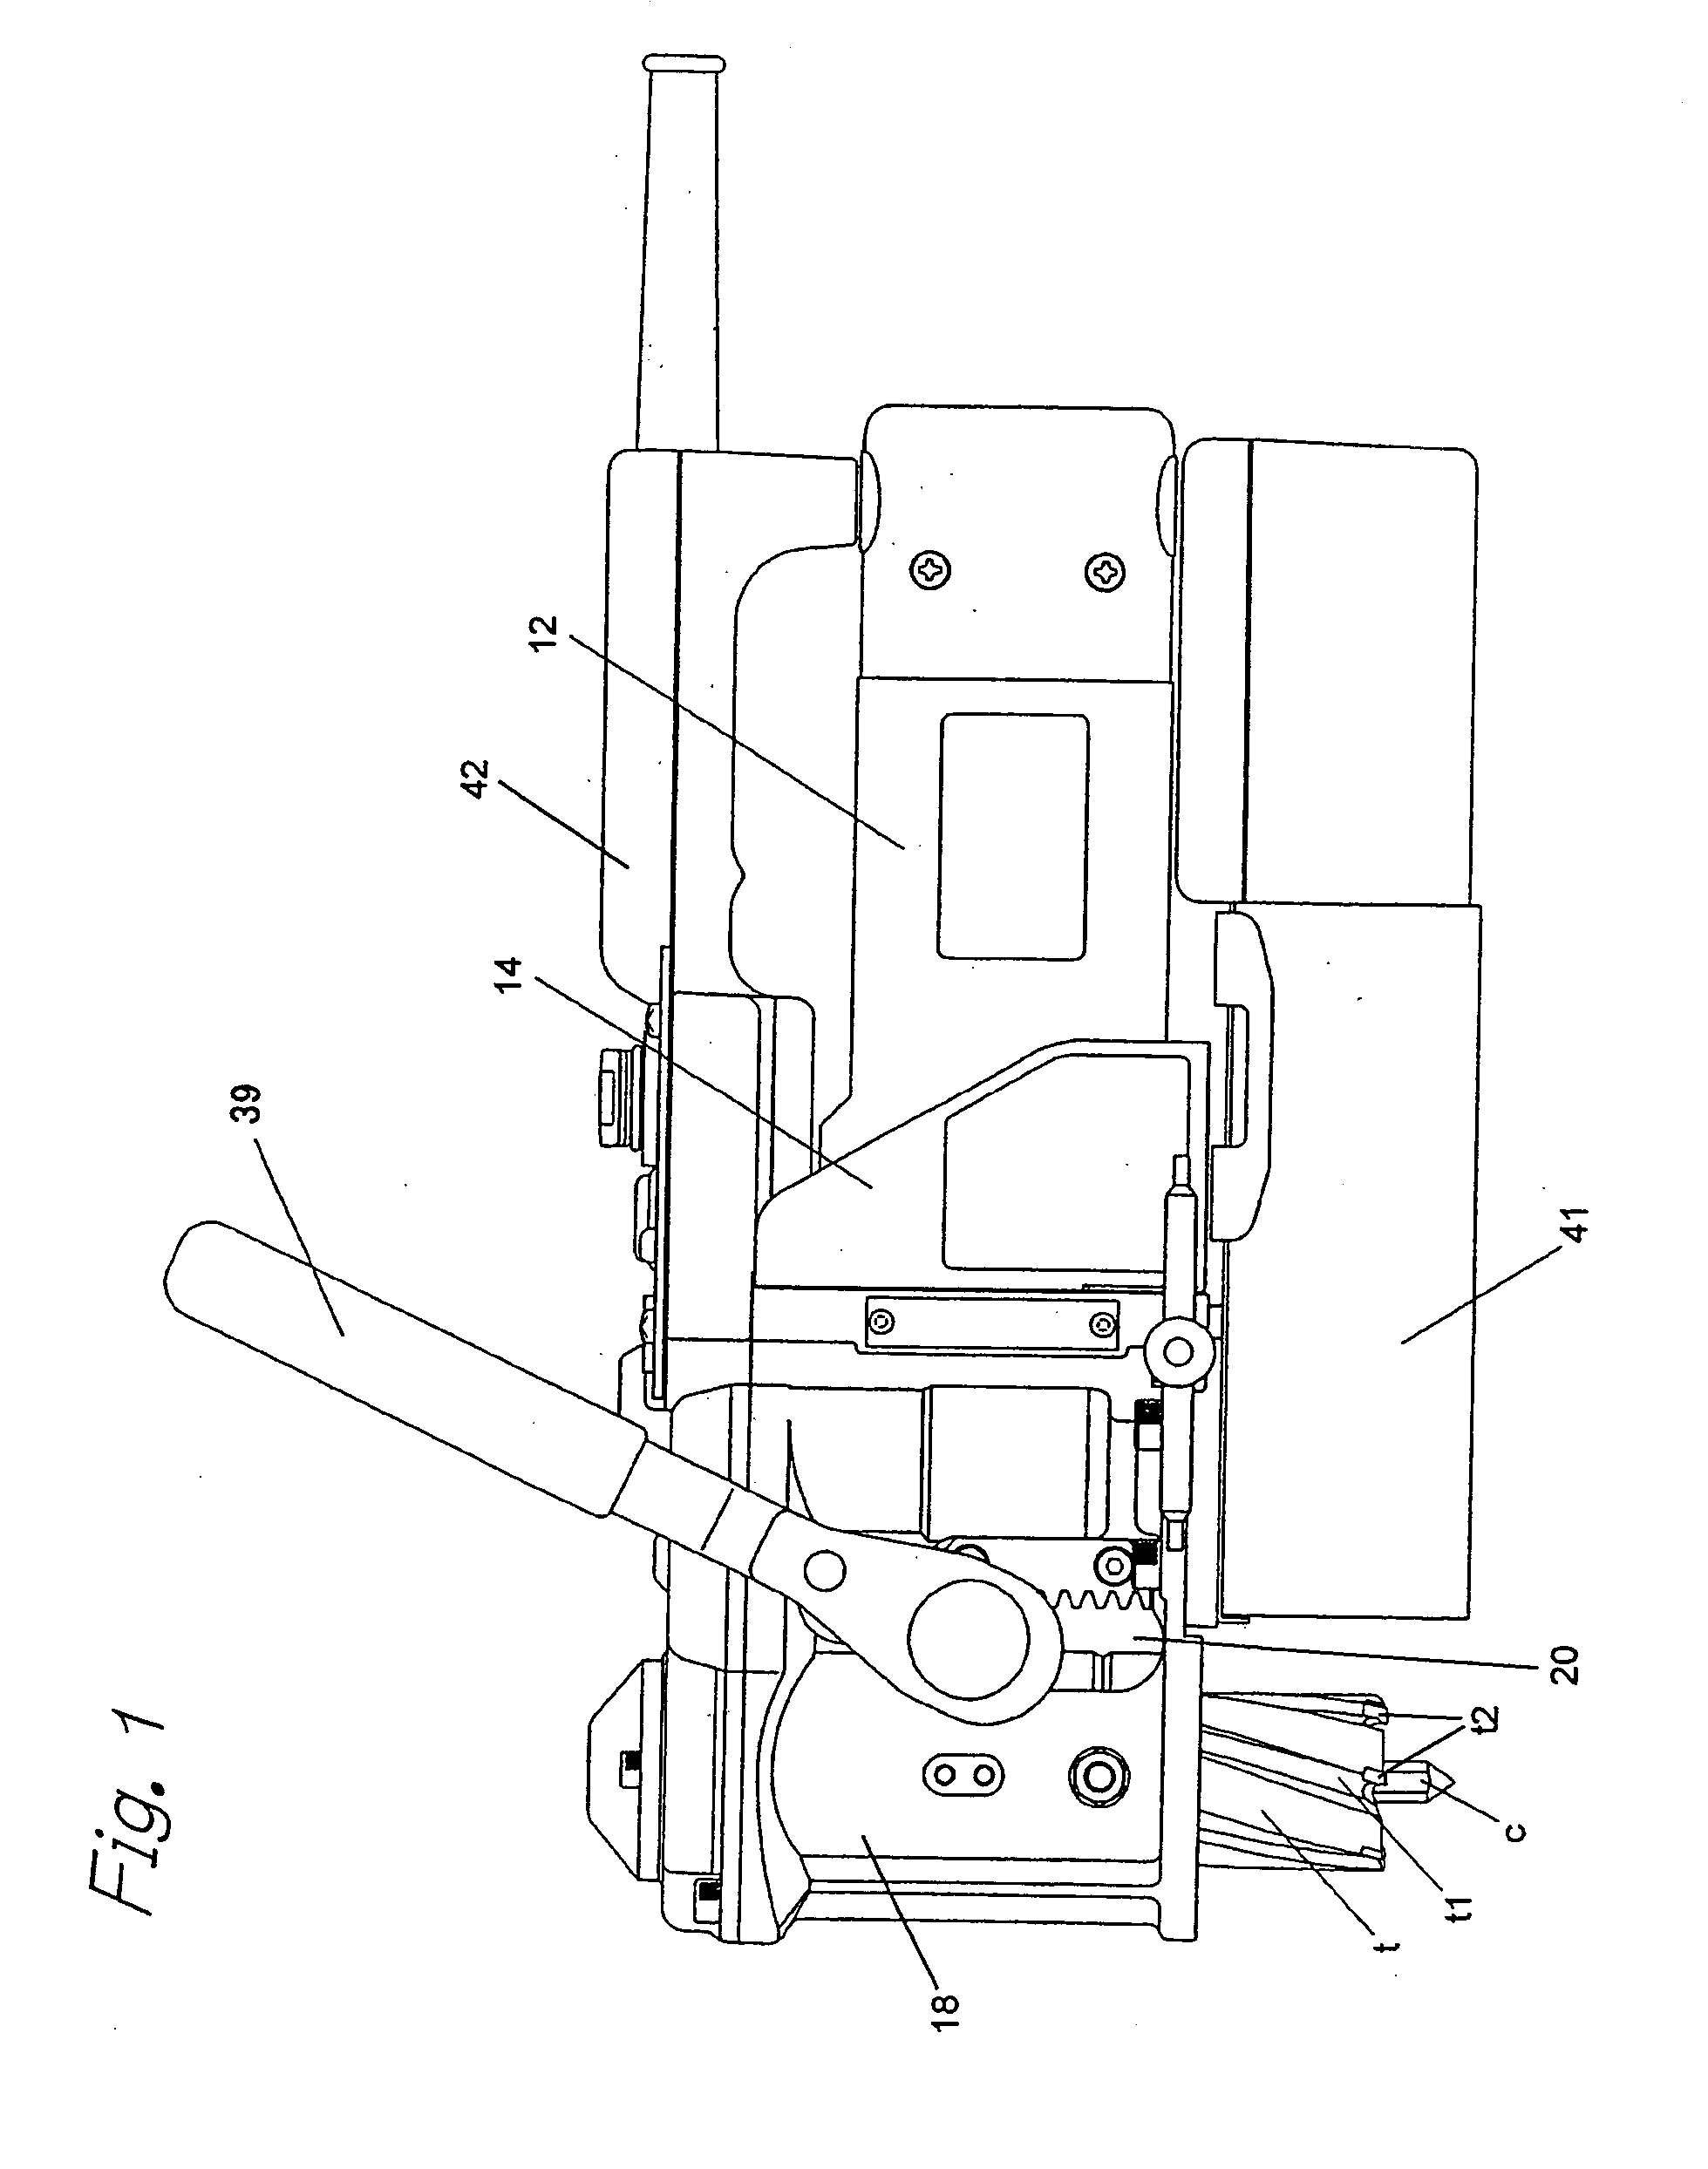 Electric drill apparatus